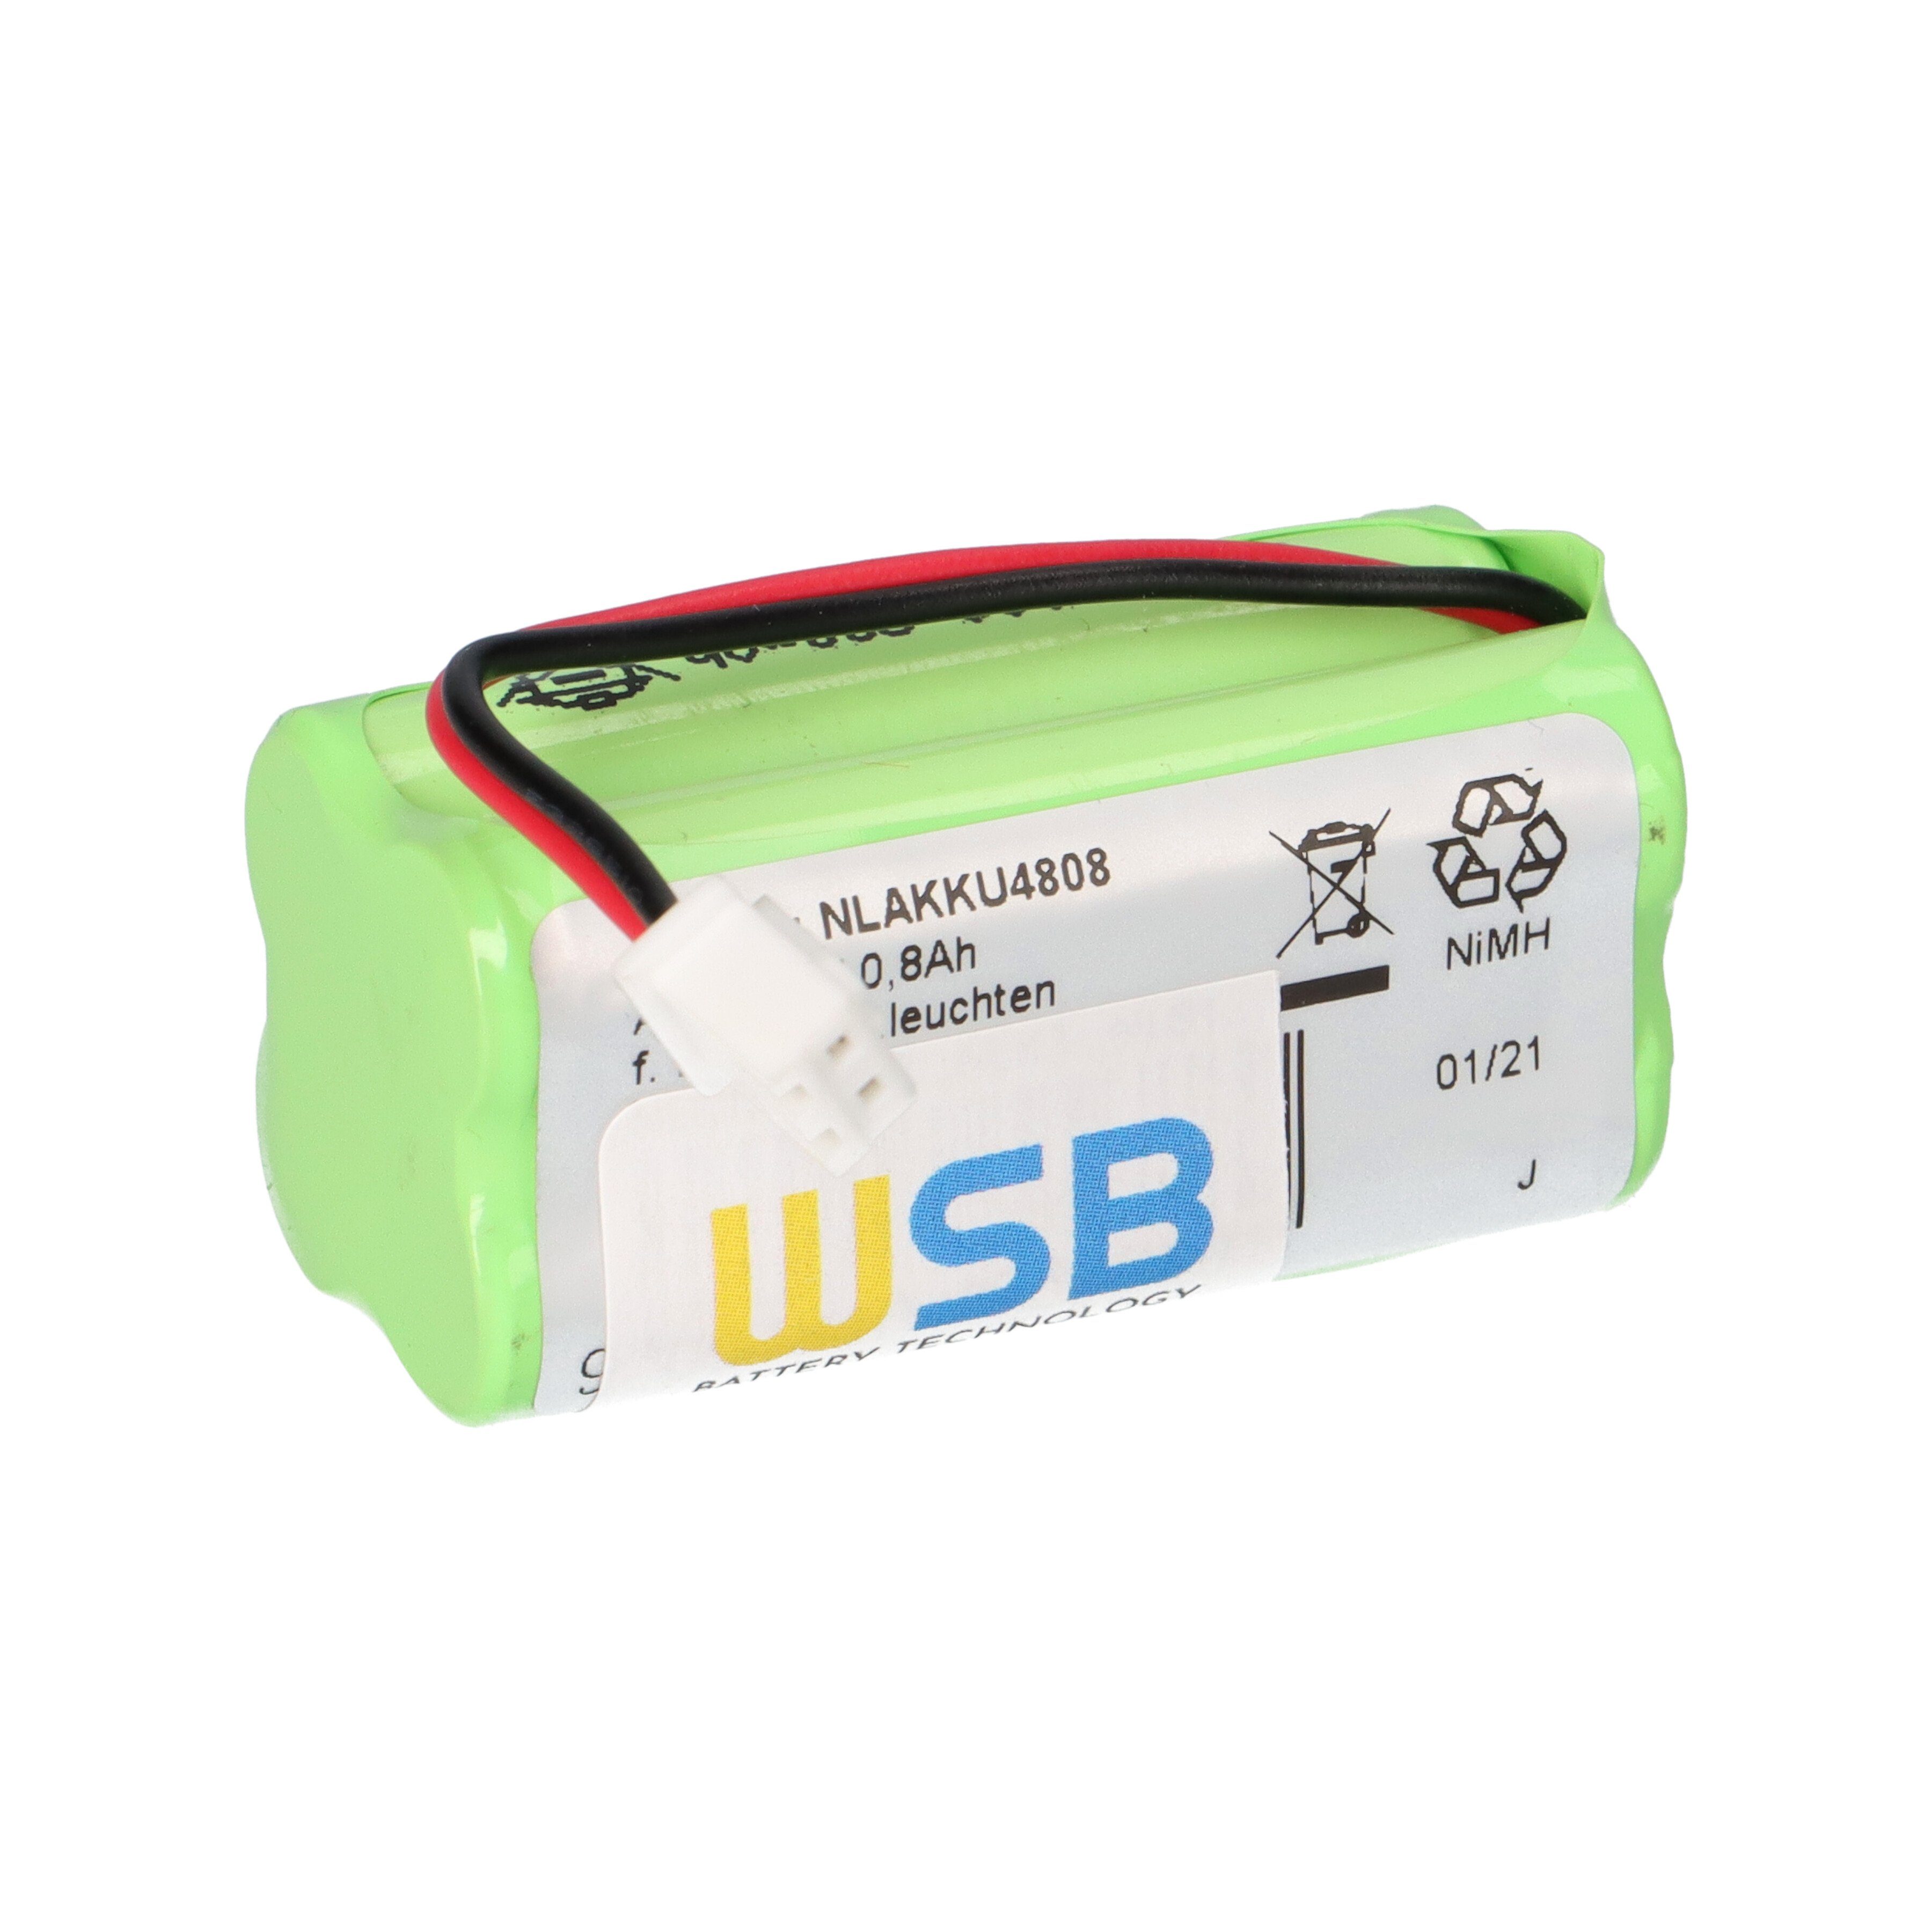 WSB Battery Technlology GmbH Fischer Akku Akkupack AW-0480-0080AAA-NM01 kompatibel 4,8V